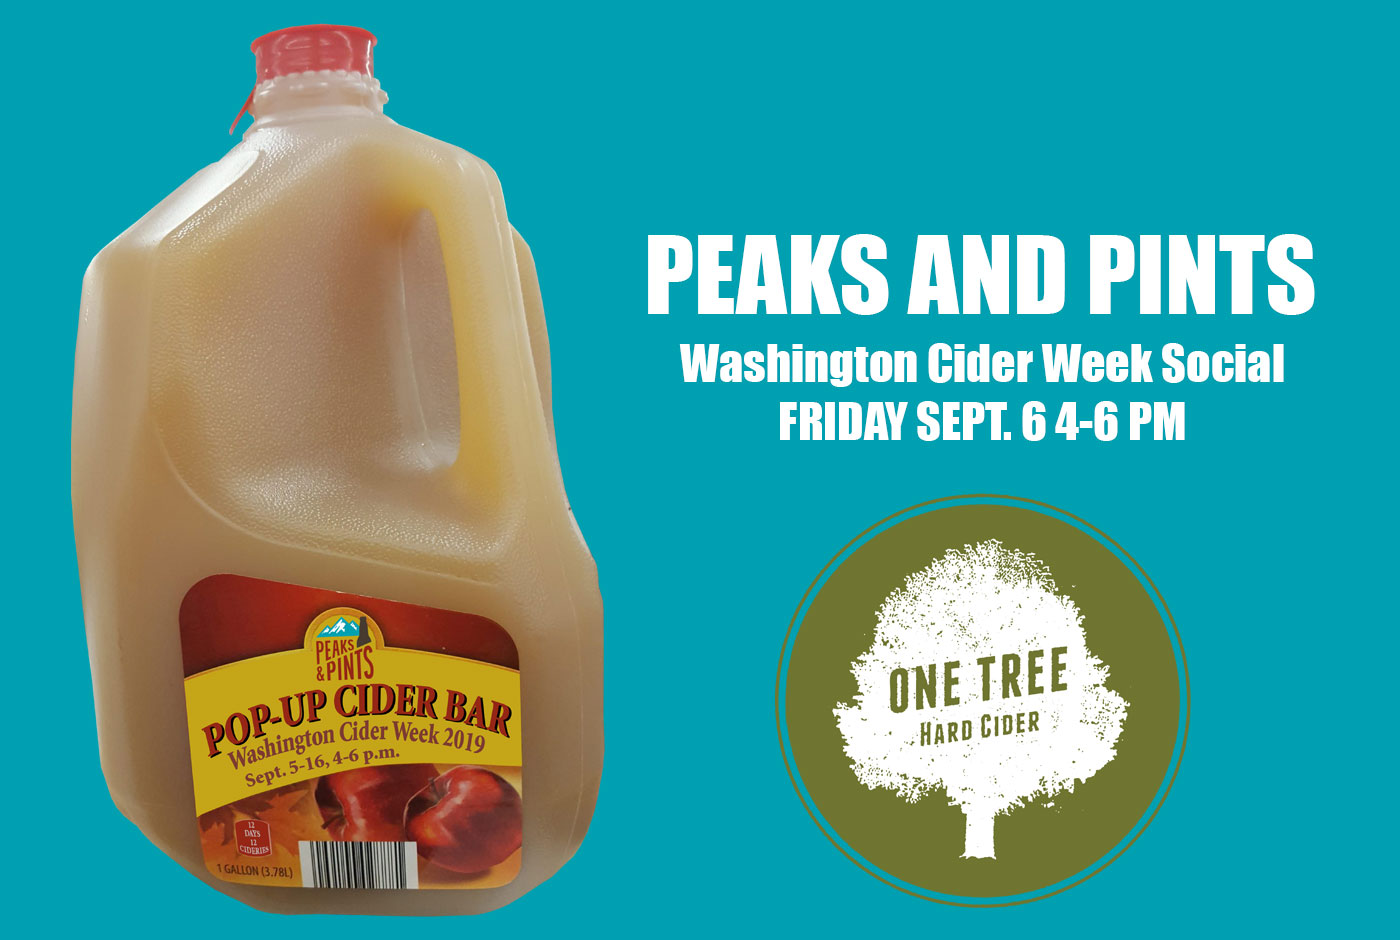 Peaks-and-Pints-Washington-Cider-Week-Social-One-Tree-Calendar